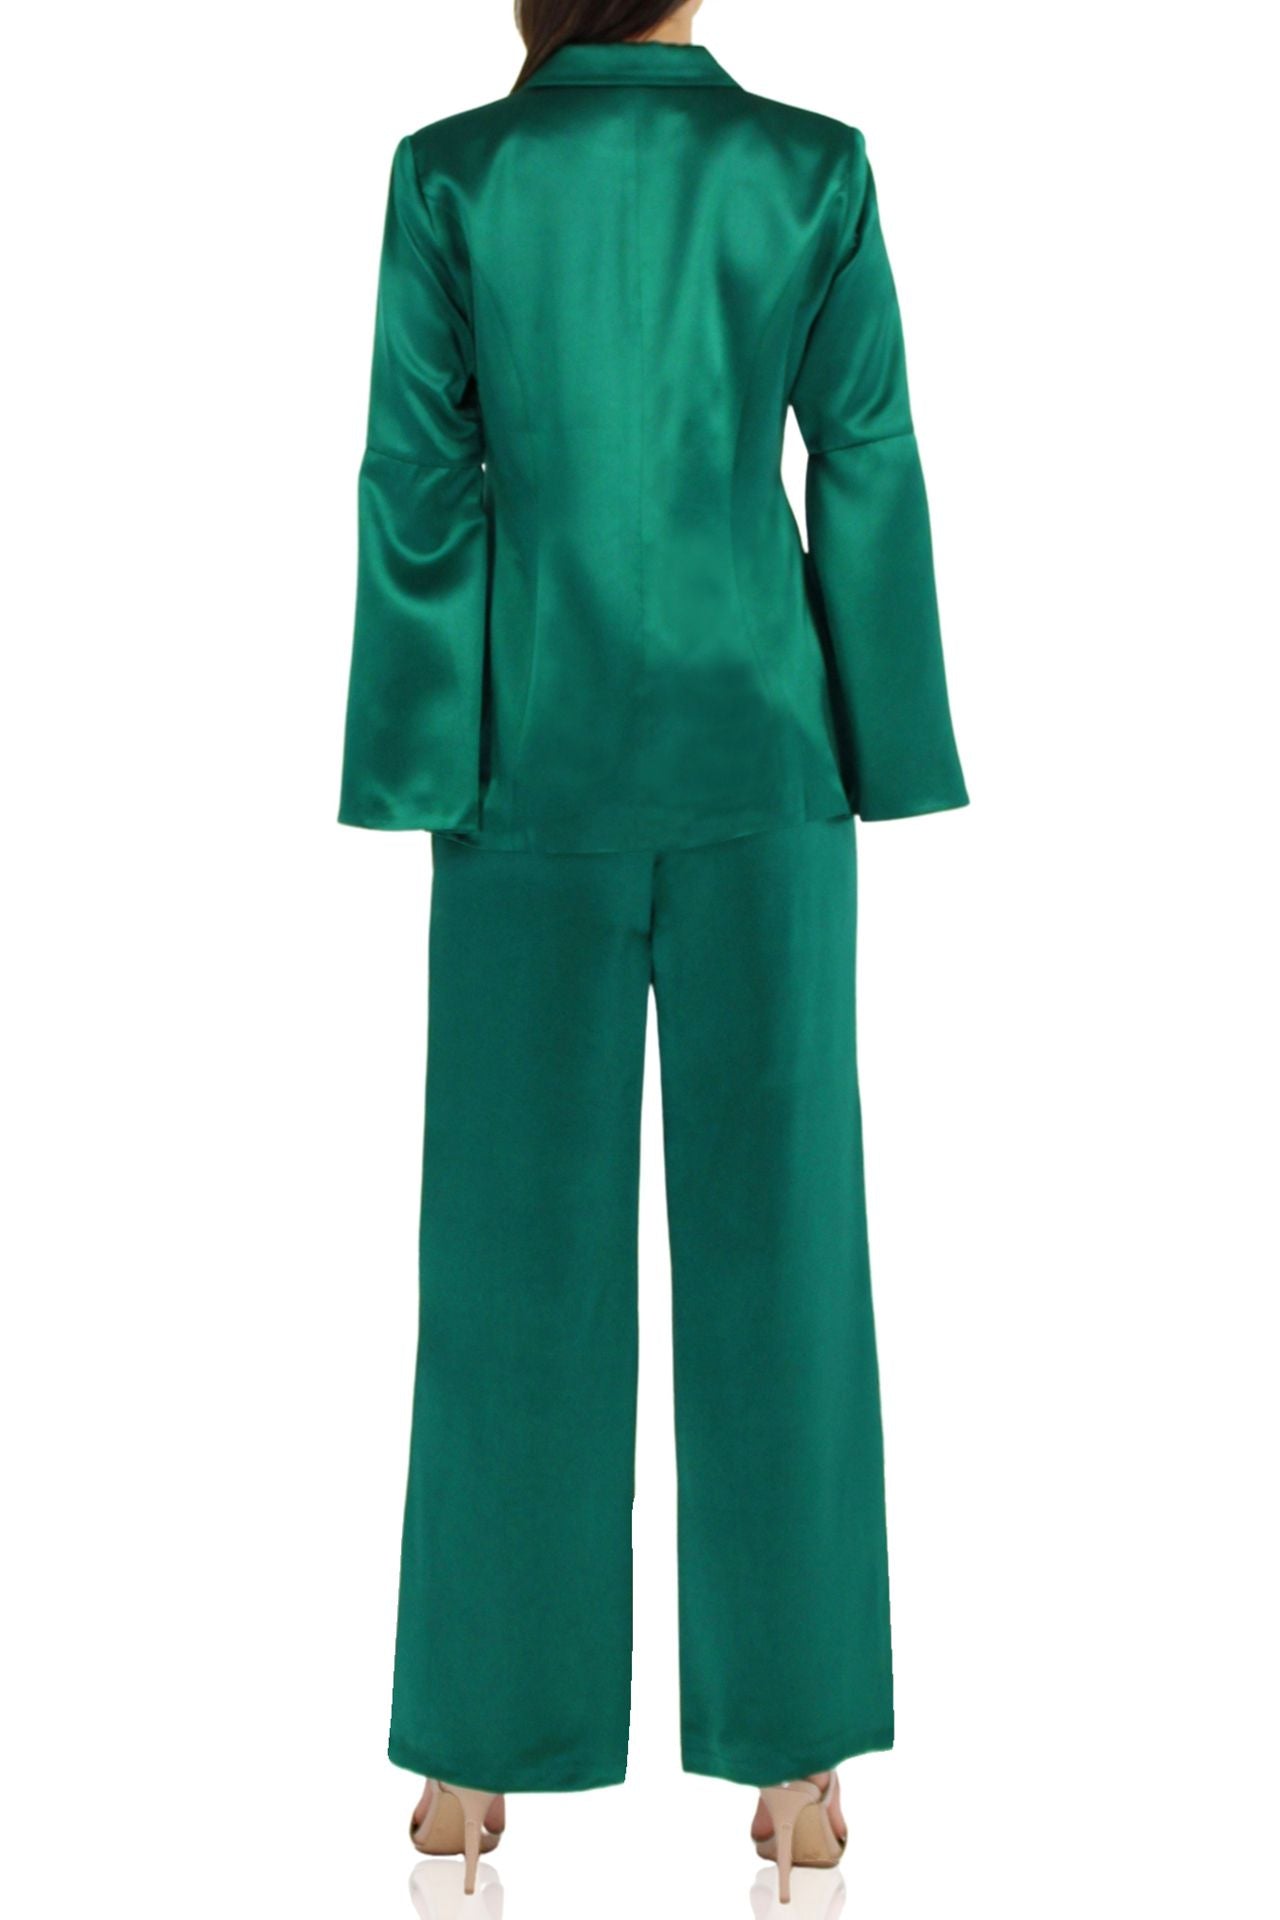 Silk-Designer-Matching-Green-Suit-By-Kyle-Richard